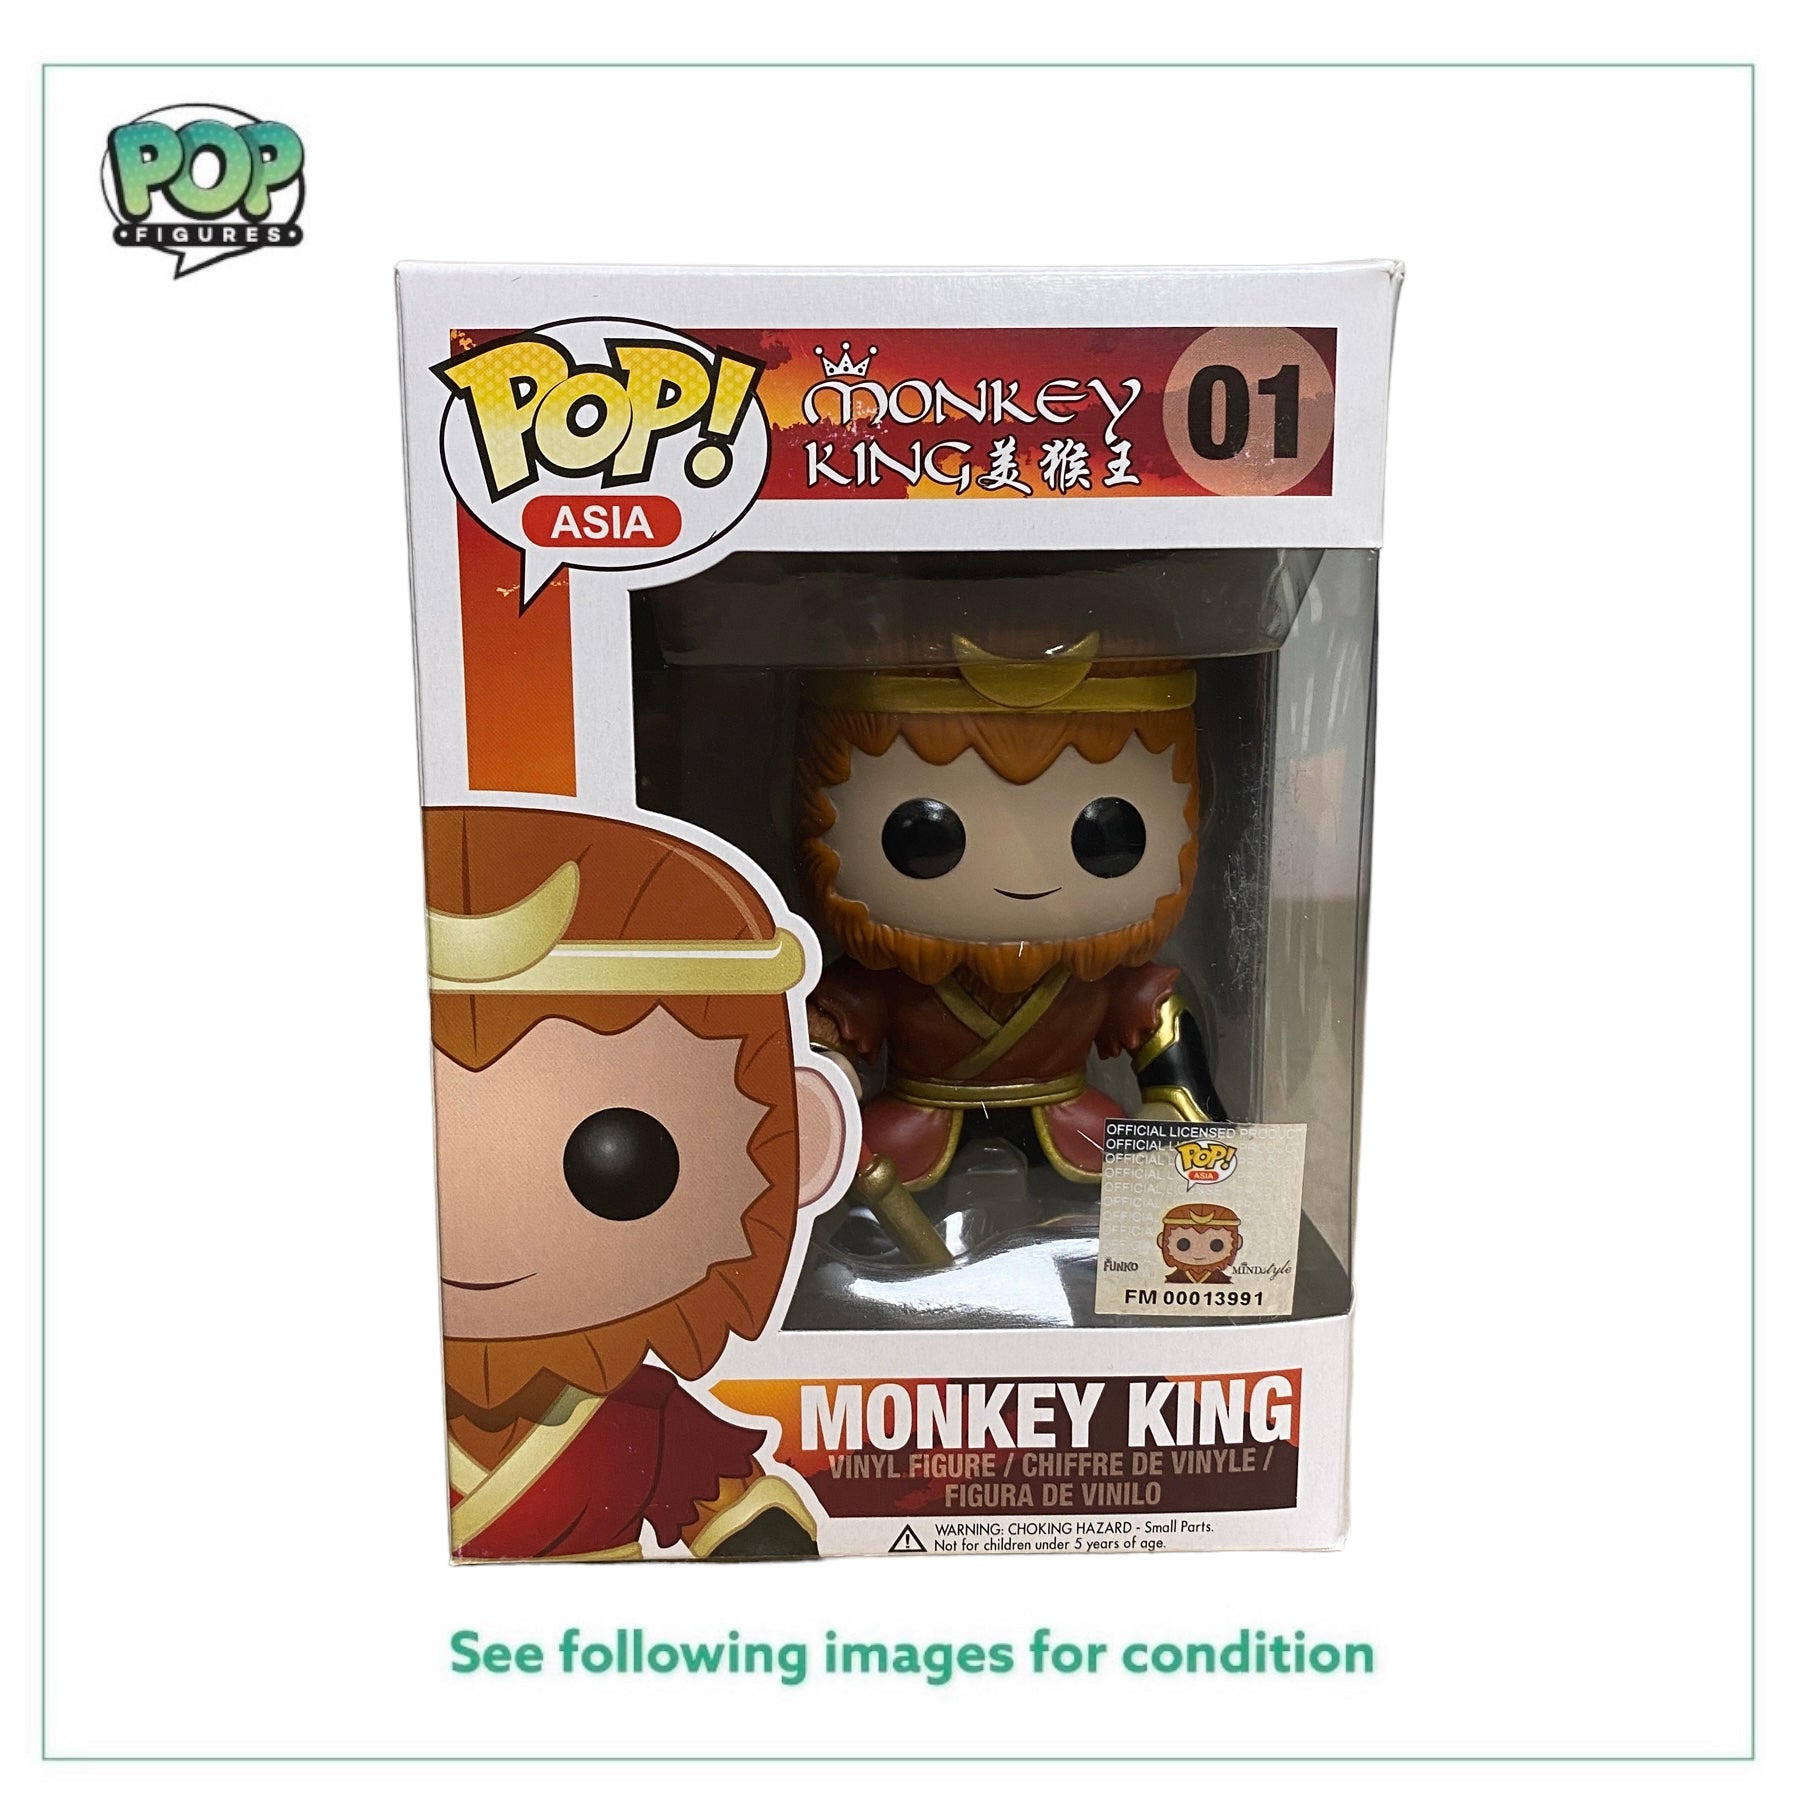 Monkey King #01 Funko Pop! - Monkey King - Mindstyle Exclusive - Condition 8.75/10